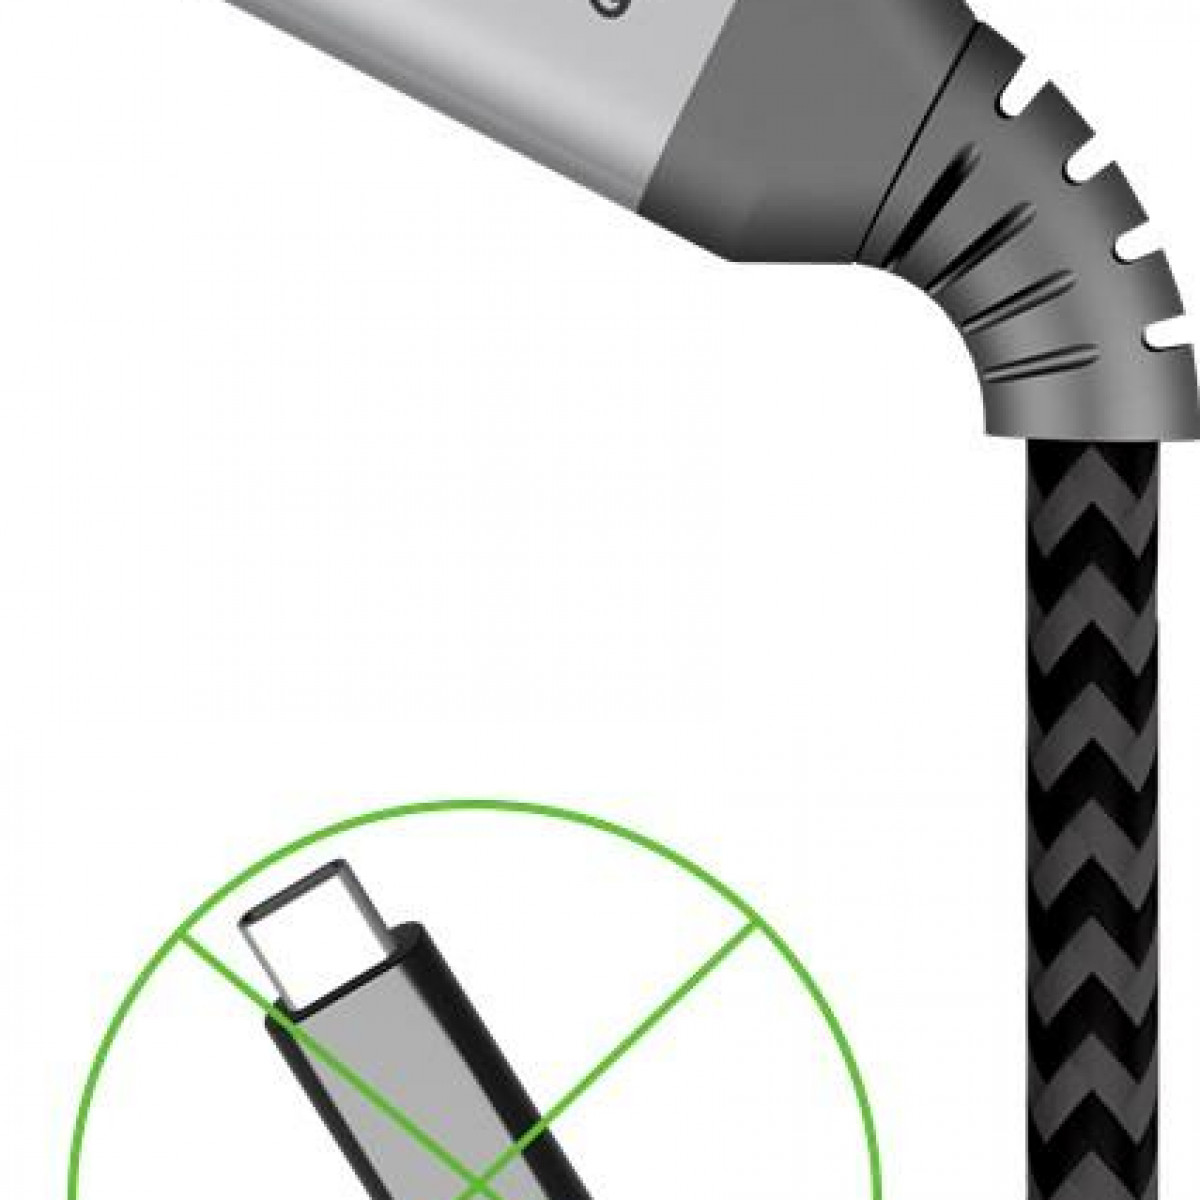 GOOBAY Lightning auf USB-A Textilkabel kabel, Metallsteckern Lightning 0,5 (spacegrau/silber), m mit